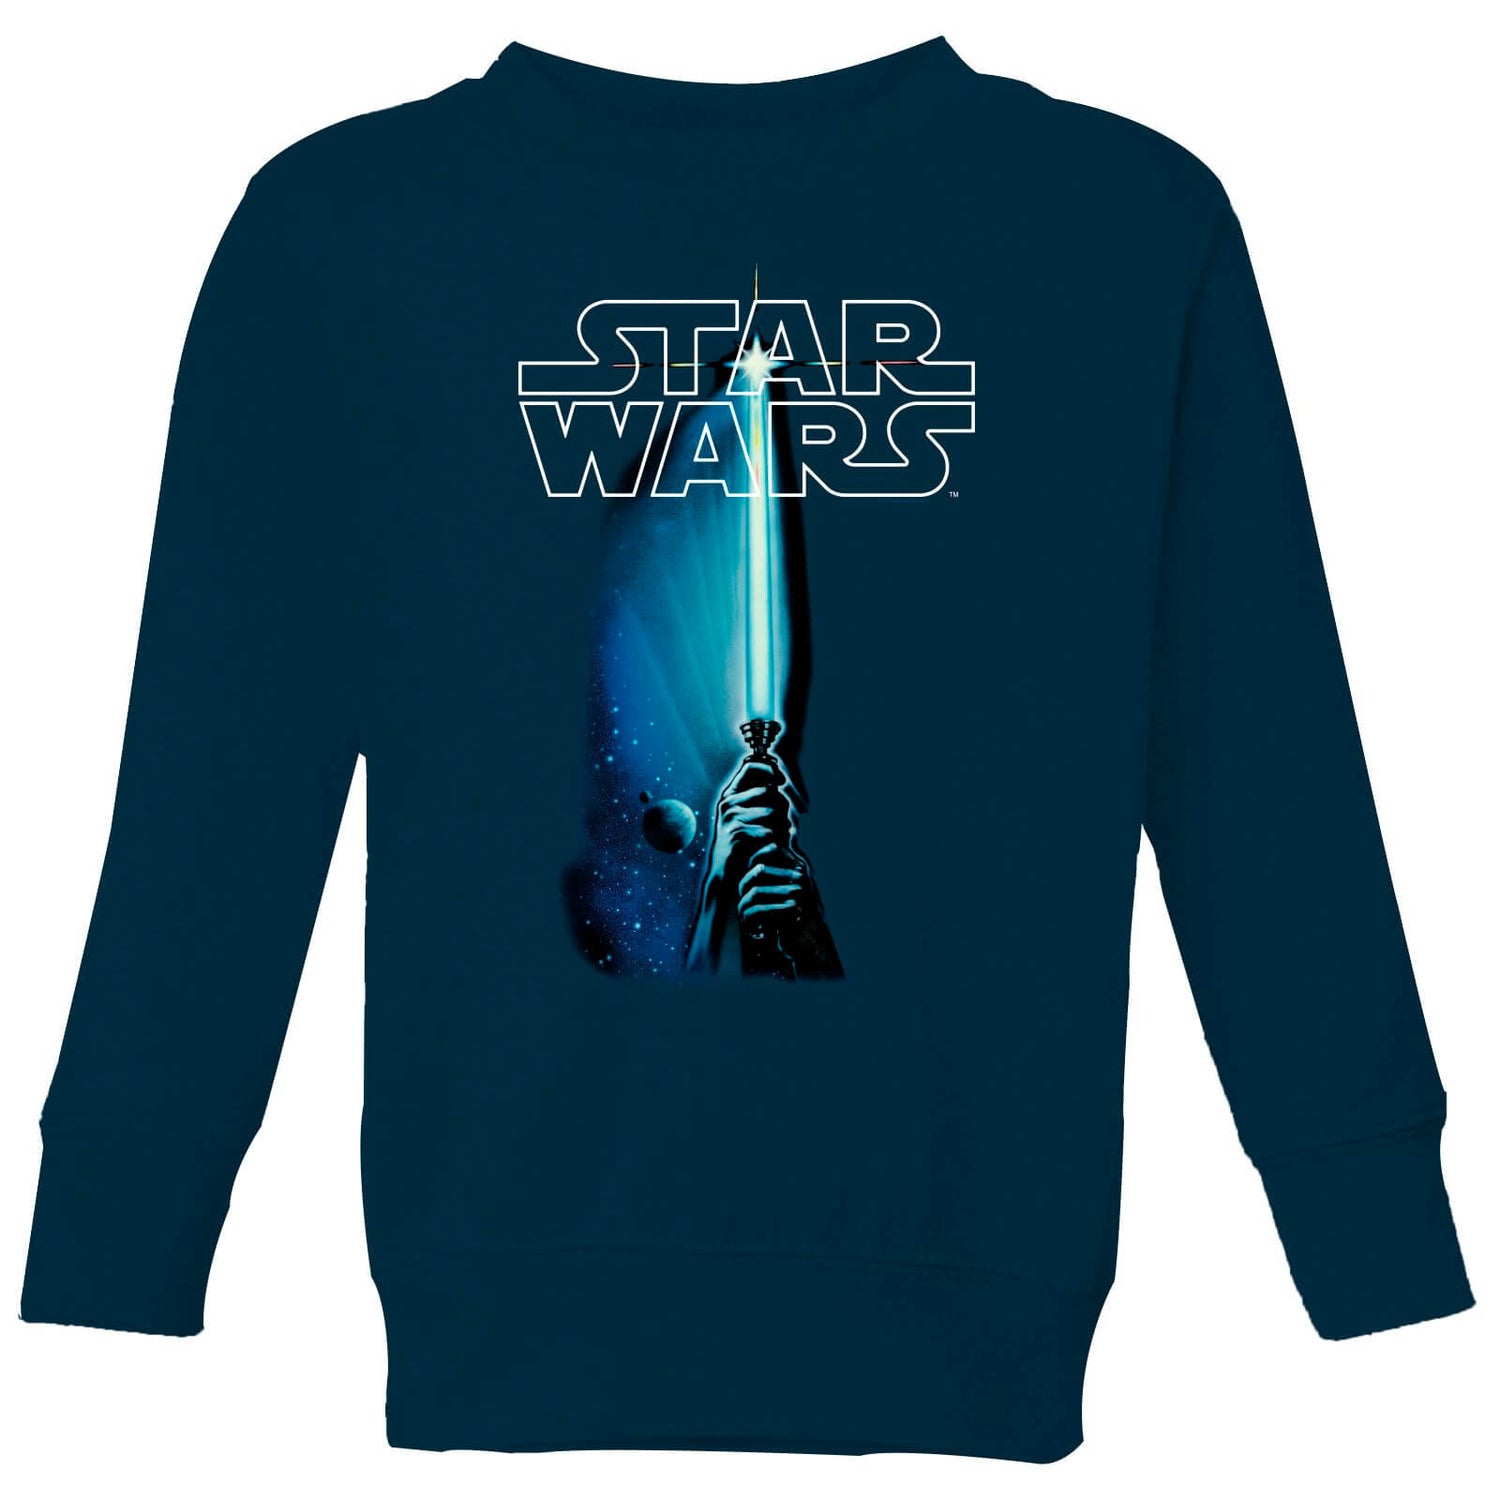 Star Wars Classic Lightsaber Kids' Sweatshirt - Navy